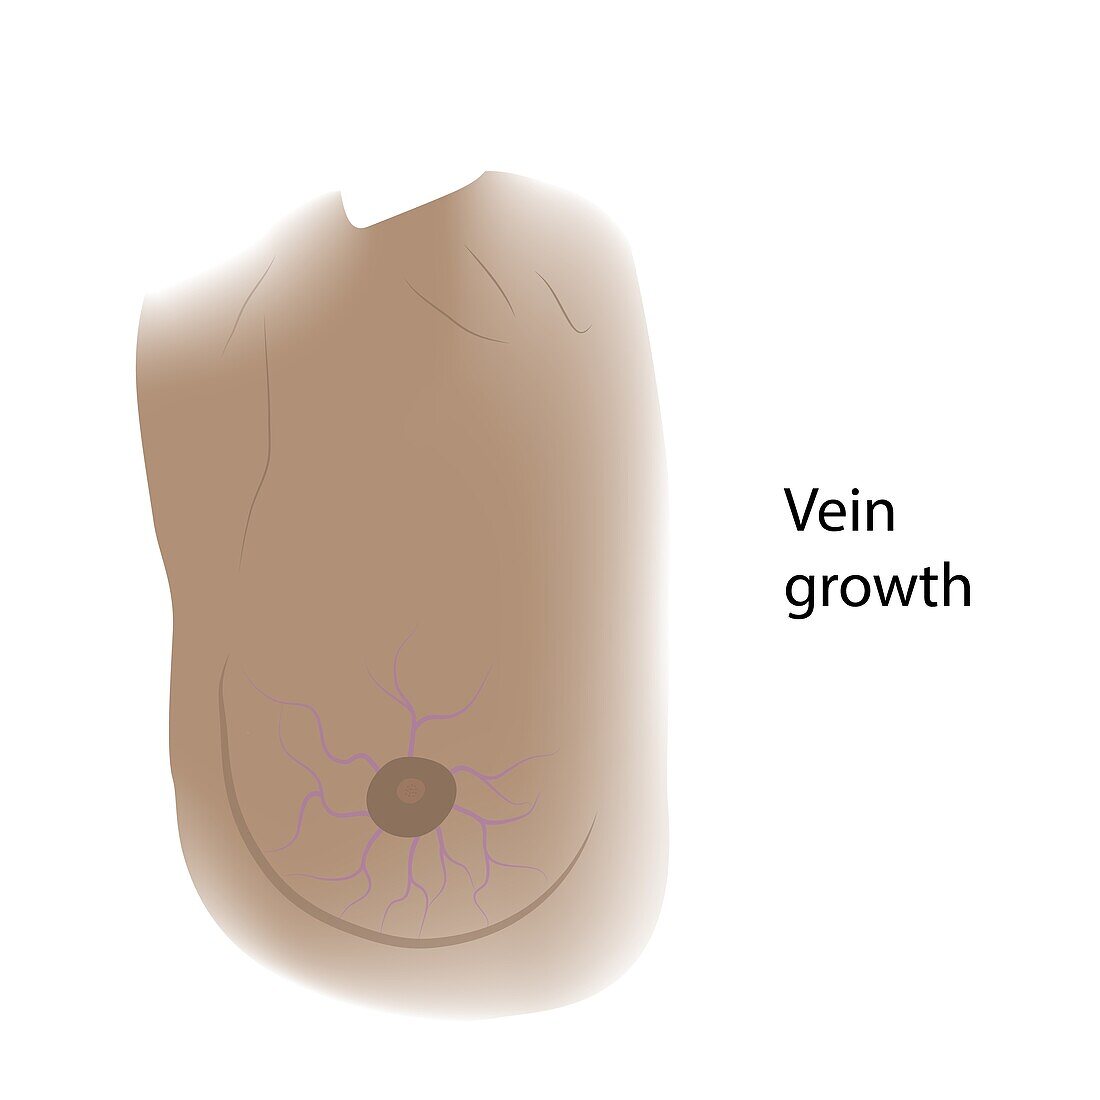 Vein growth in female breast, illustration